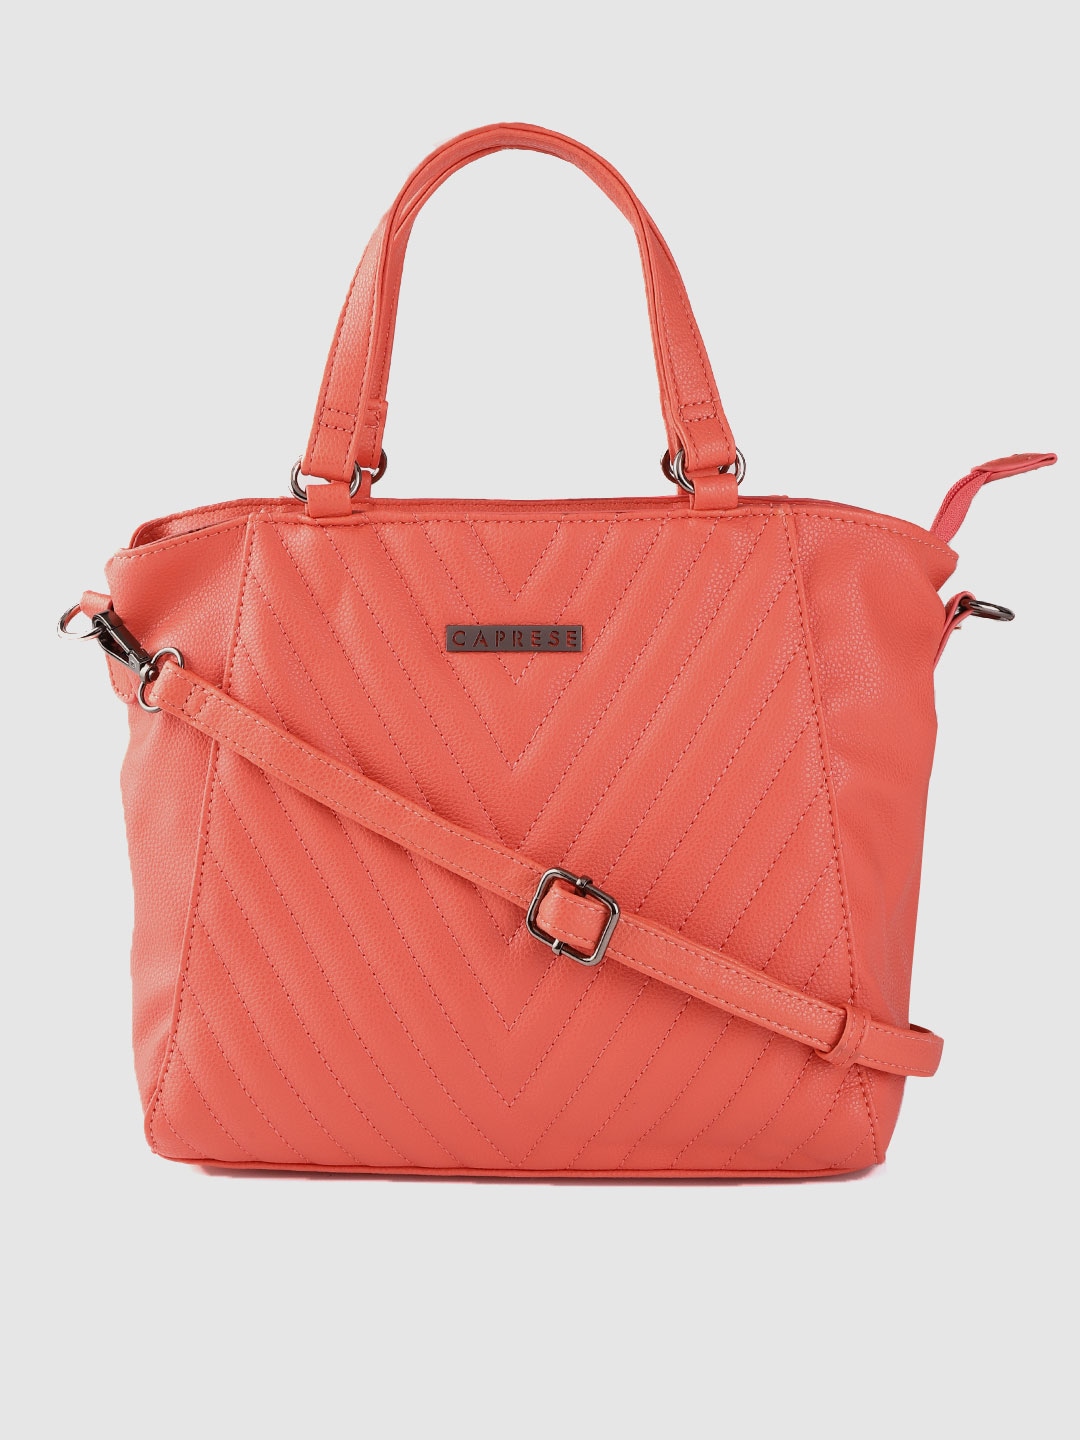 Caprese Coral Pink Quilted Handheld Bag